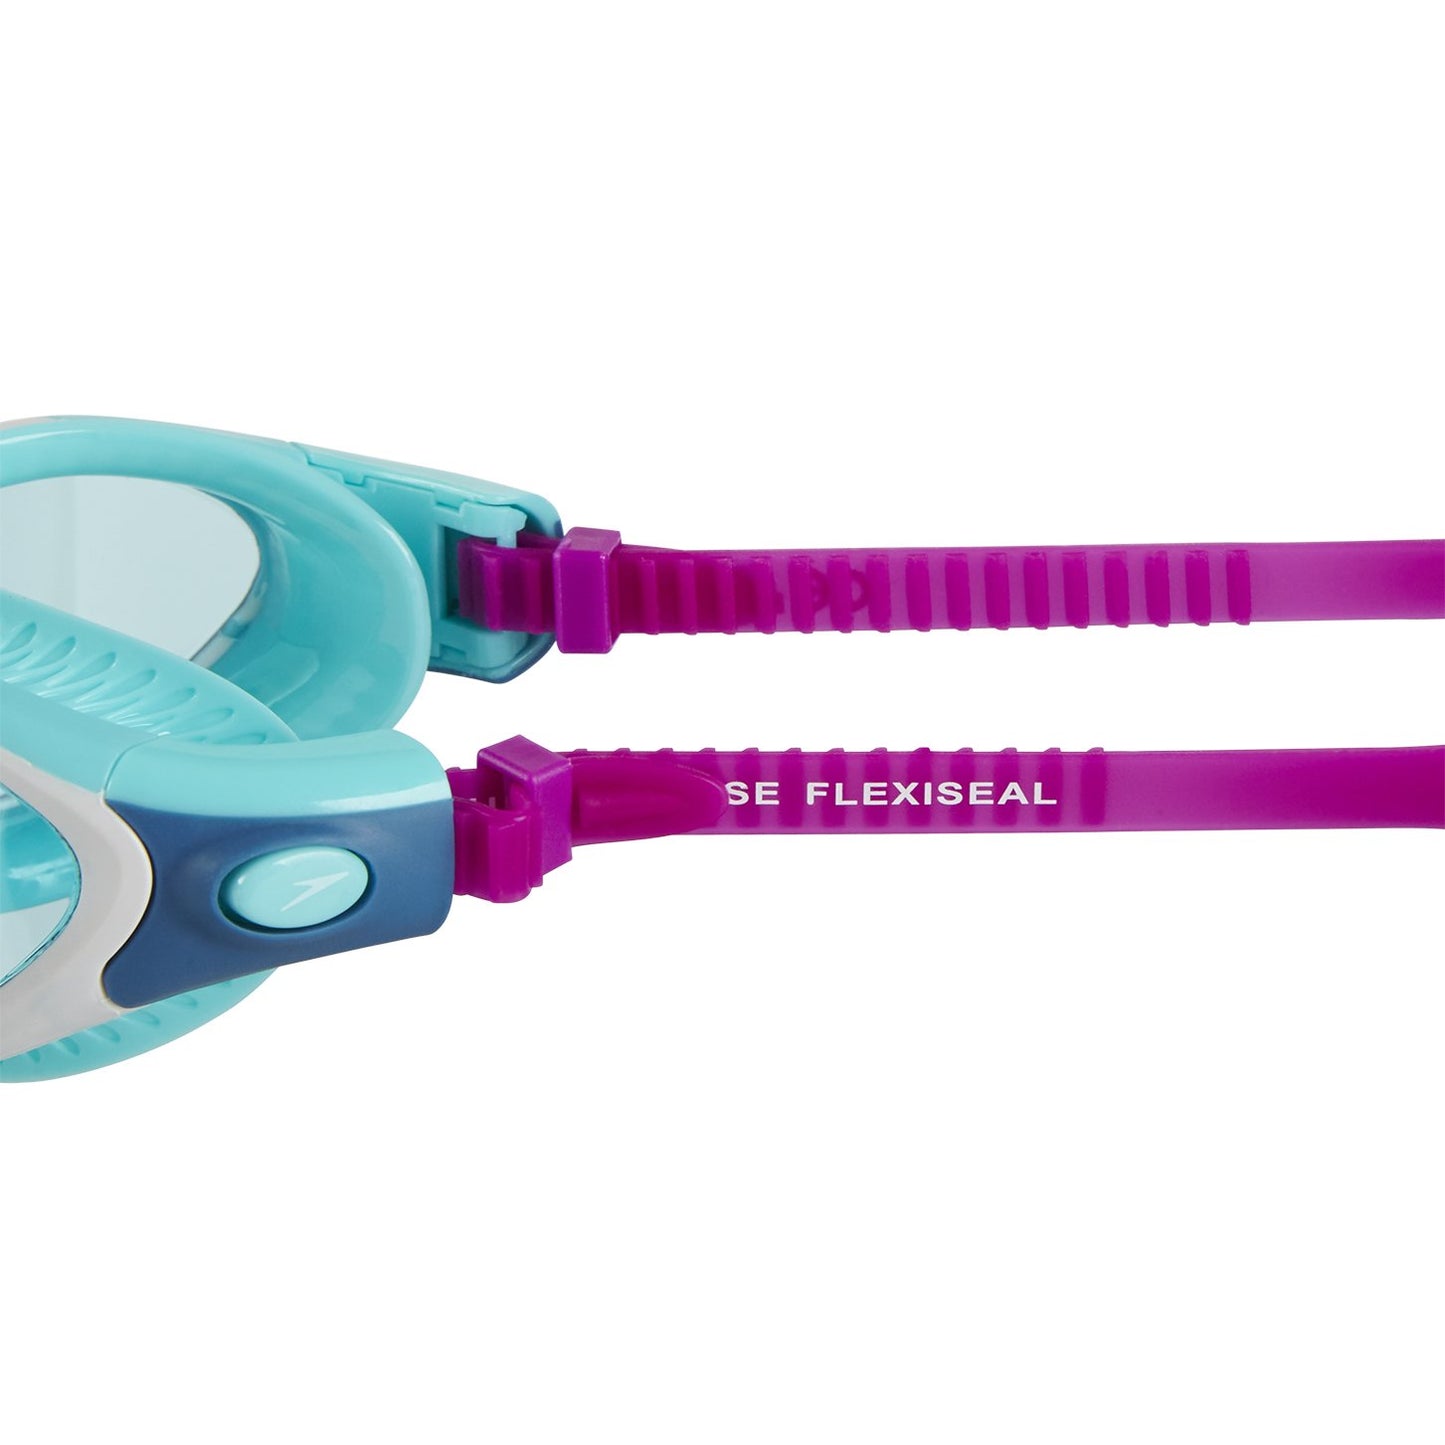 Speedo-Goggles-Futura Biofuse Flexisle Women's Goggles-Blue - Best Price online Prokicksports.com